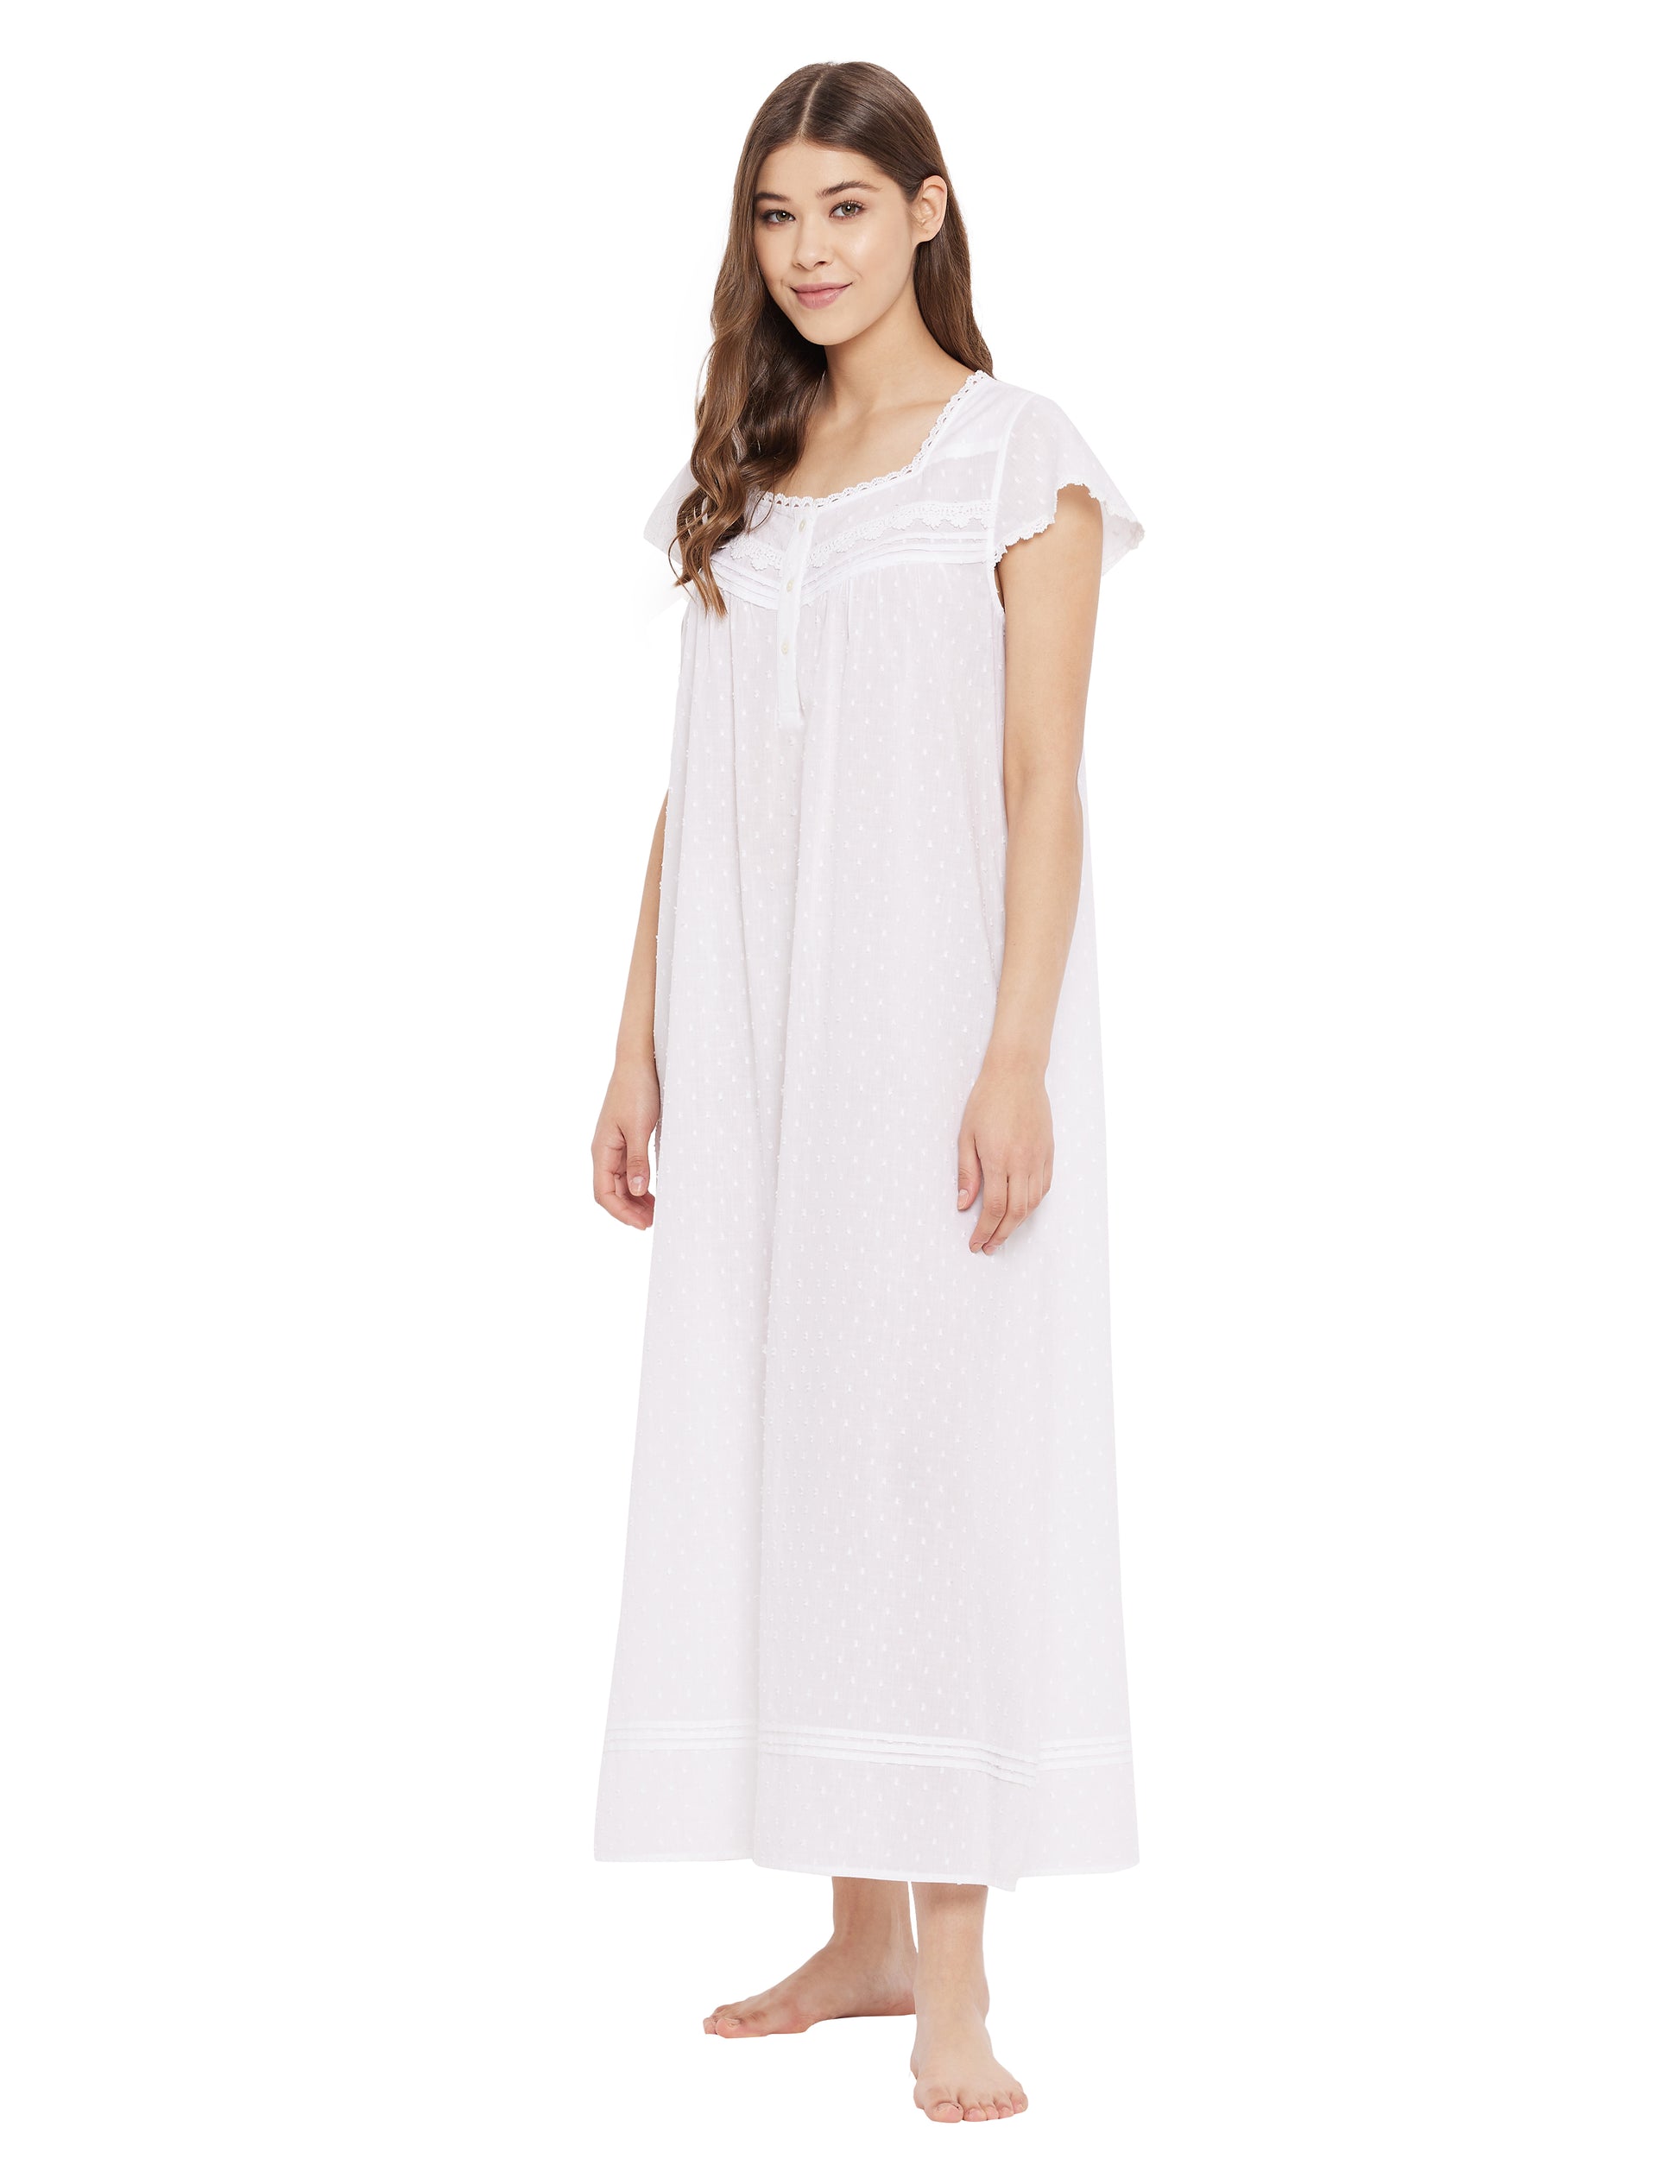 Sofia Cotton Lace Maxi Dress Gown  34.00 Indigo Paisley